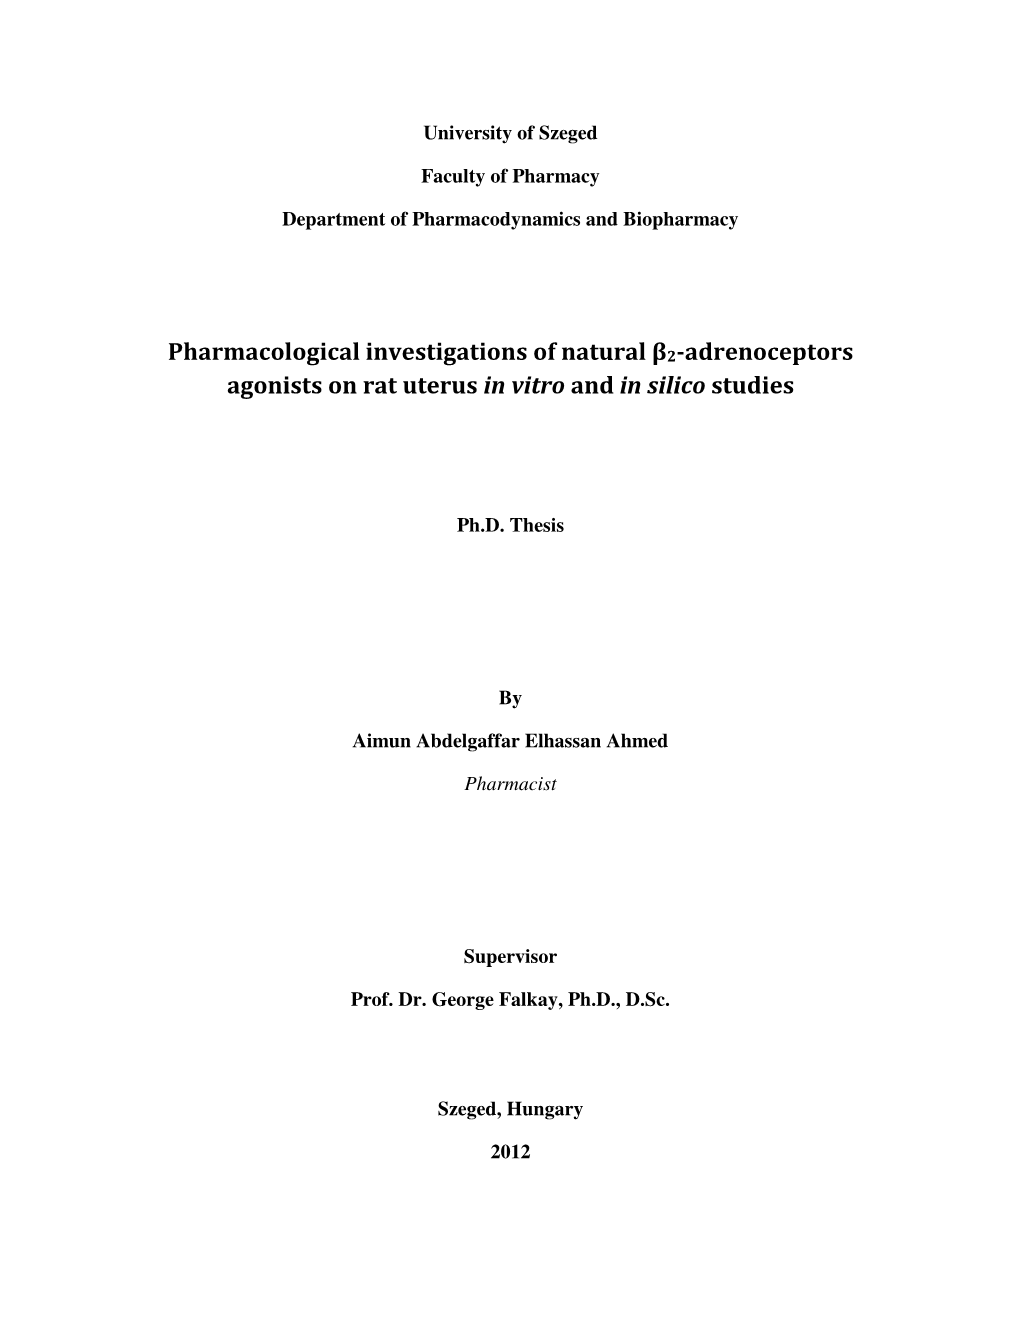 Pharmacological Investigations of Natural Β2-Adrenoceptors Agonists